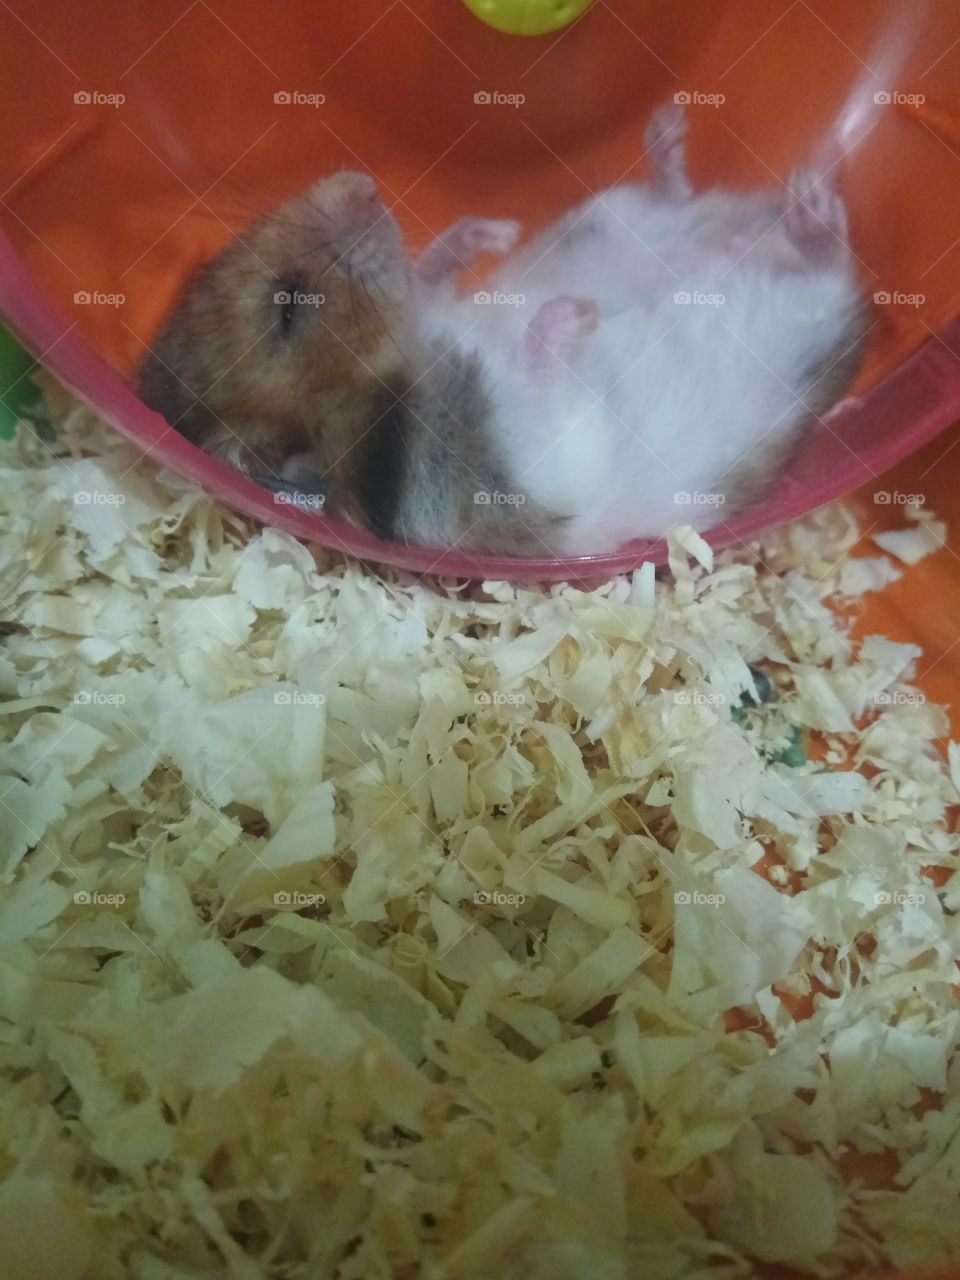 Sleeping hamster